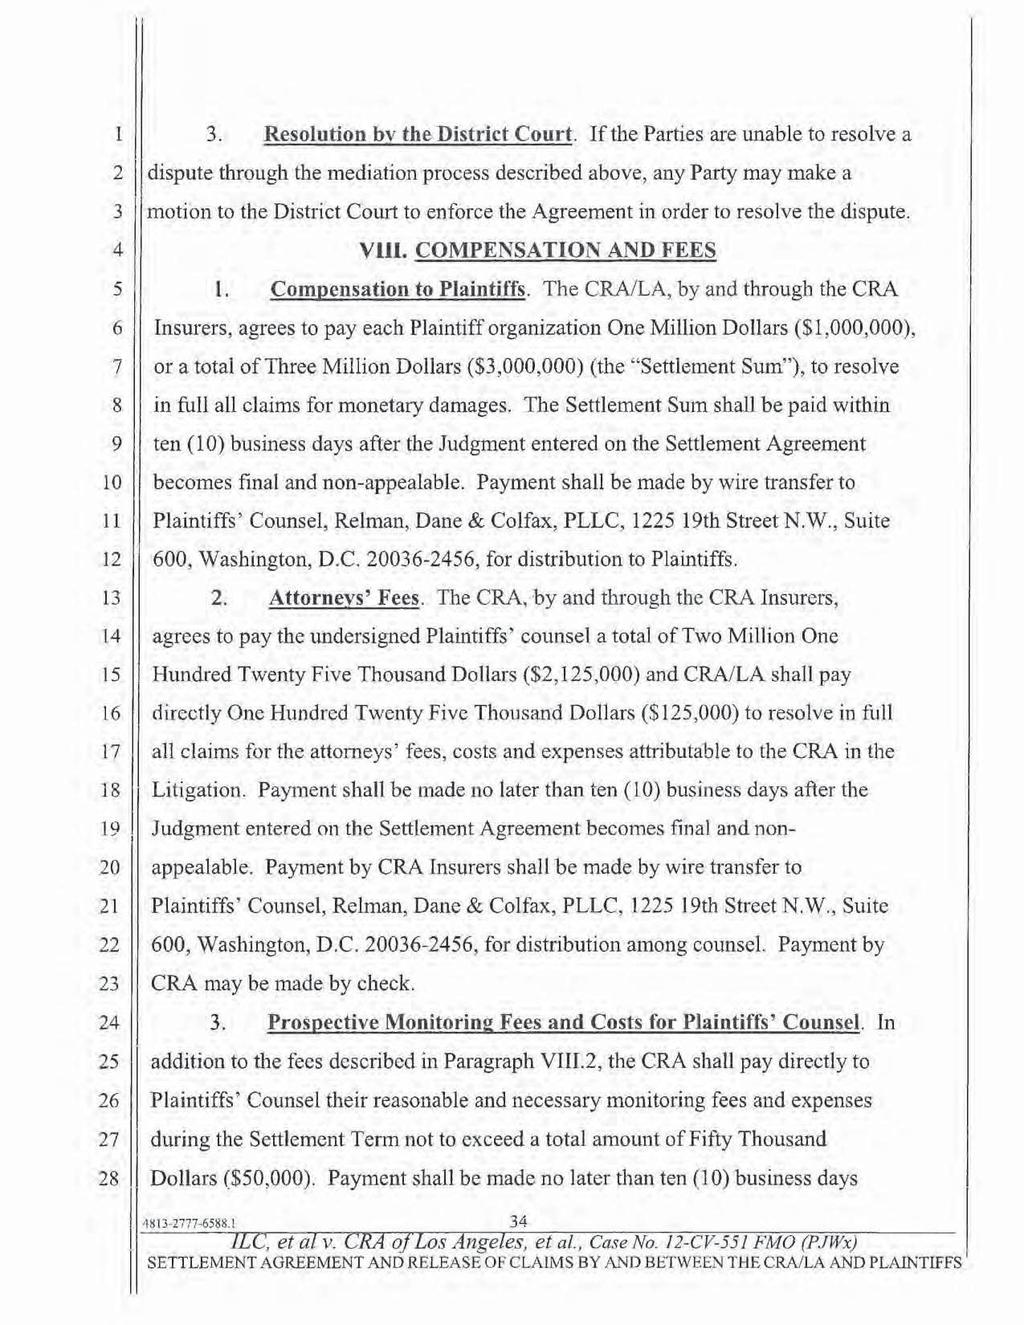 Case 2:12-cv-00551-FMO-PJW Document 596